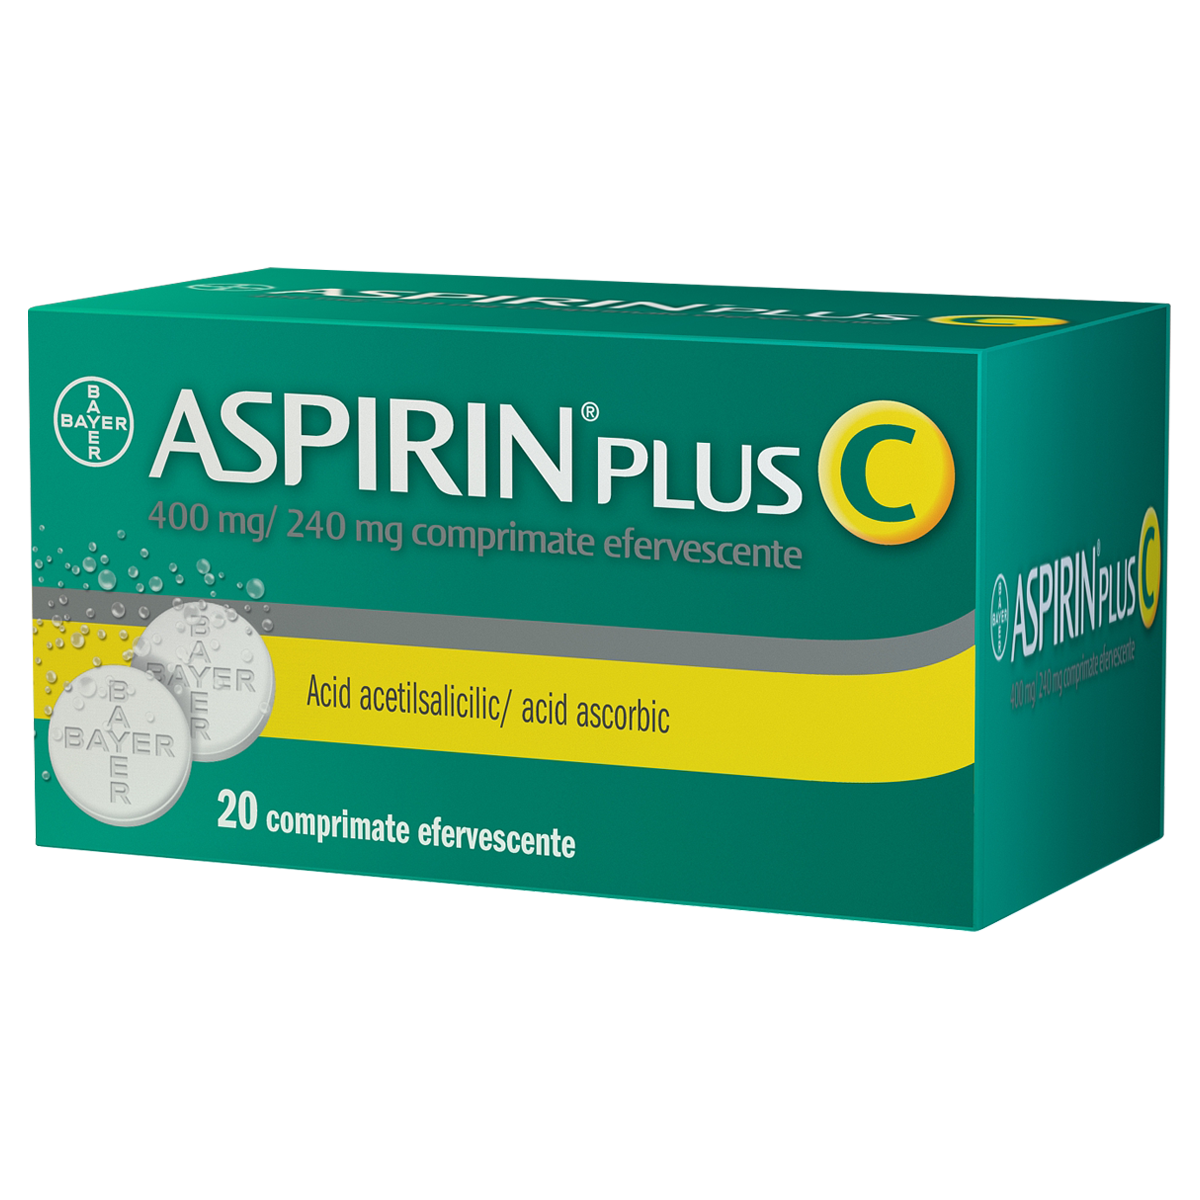 Aspirin Plus C, 20 comprimate efervescente, Bayer